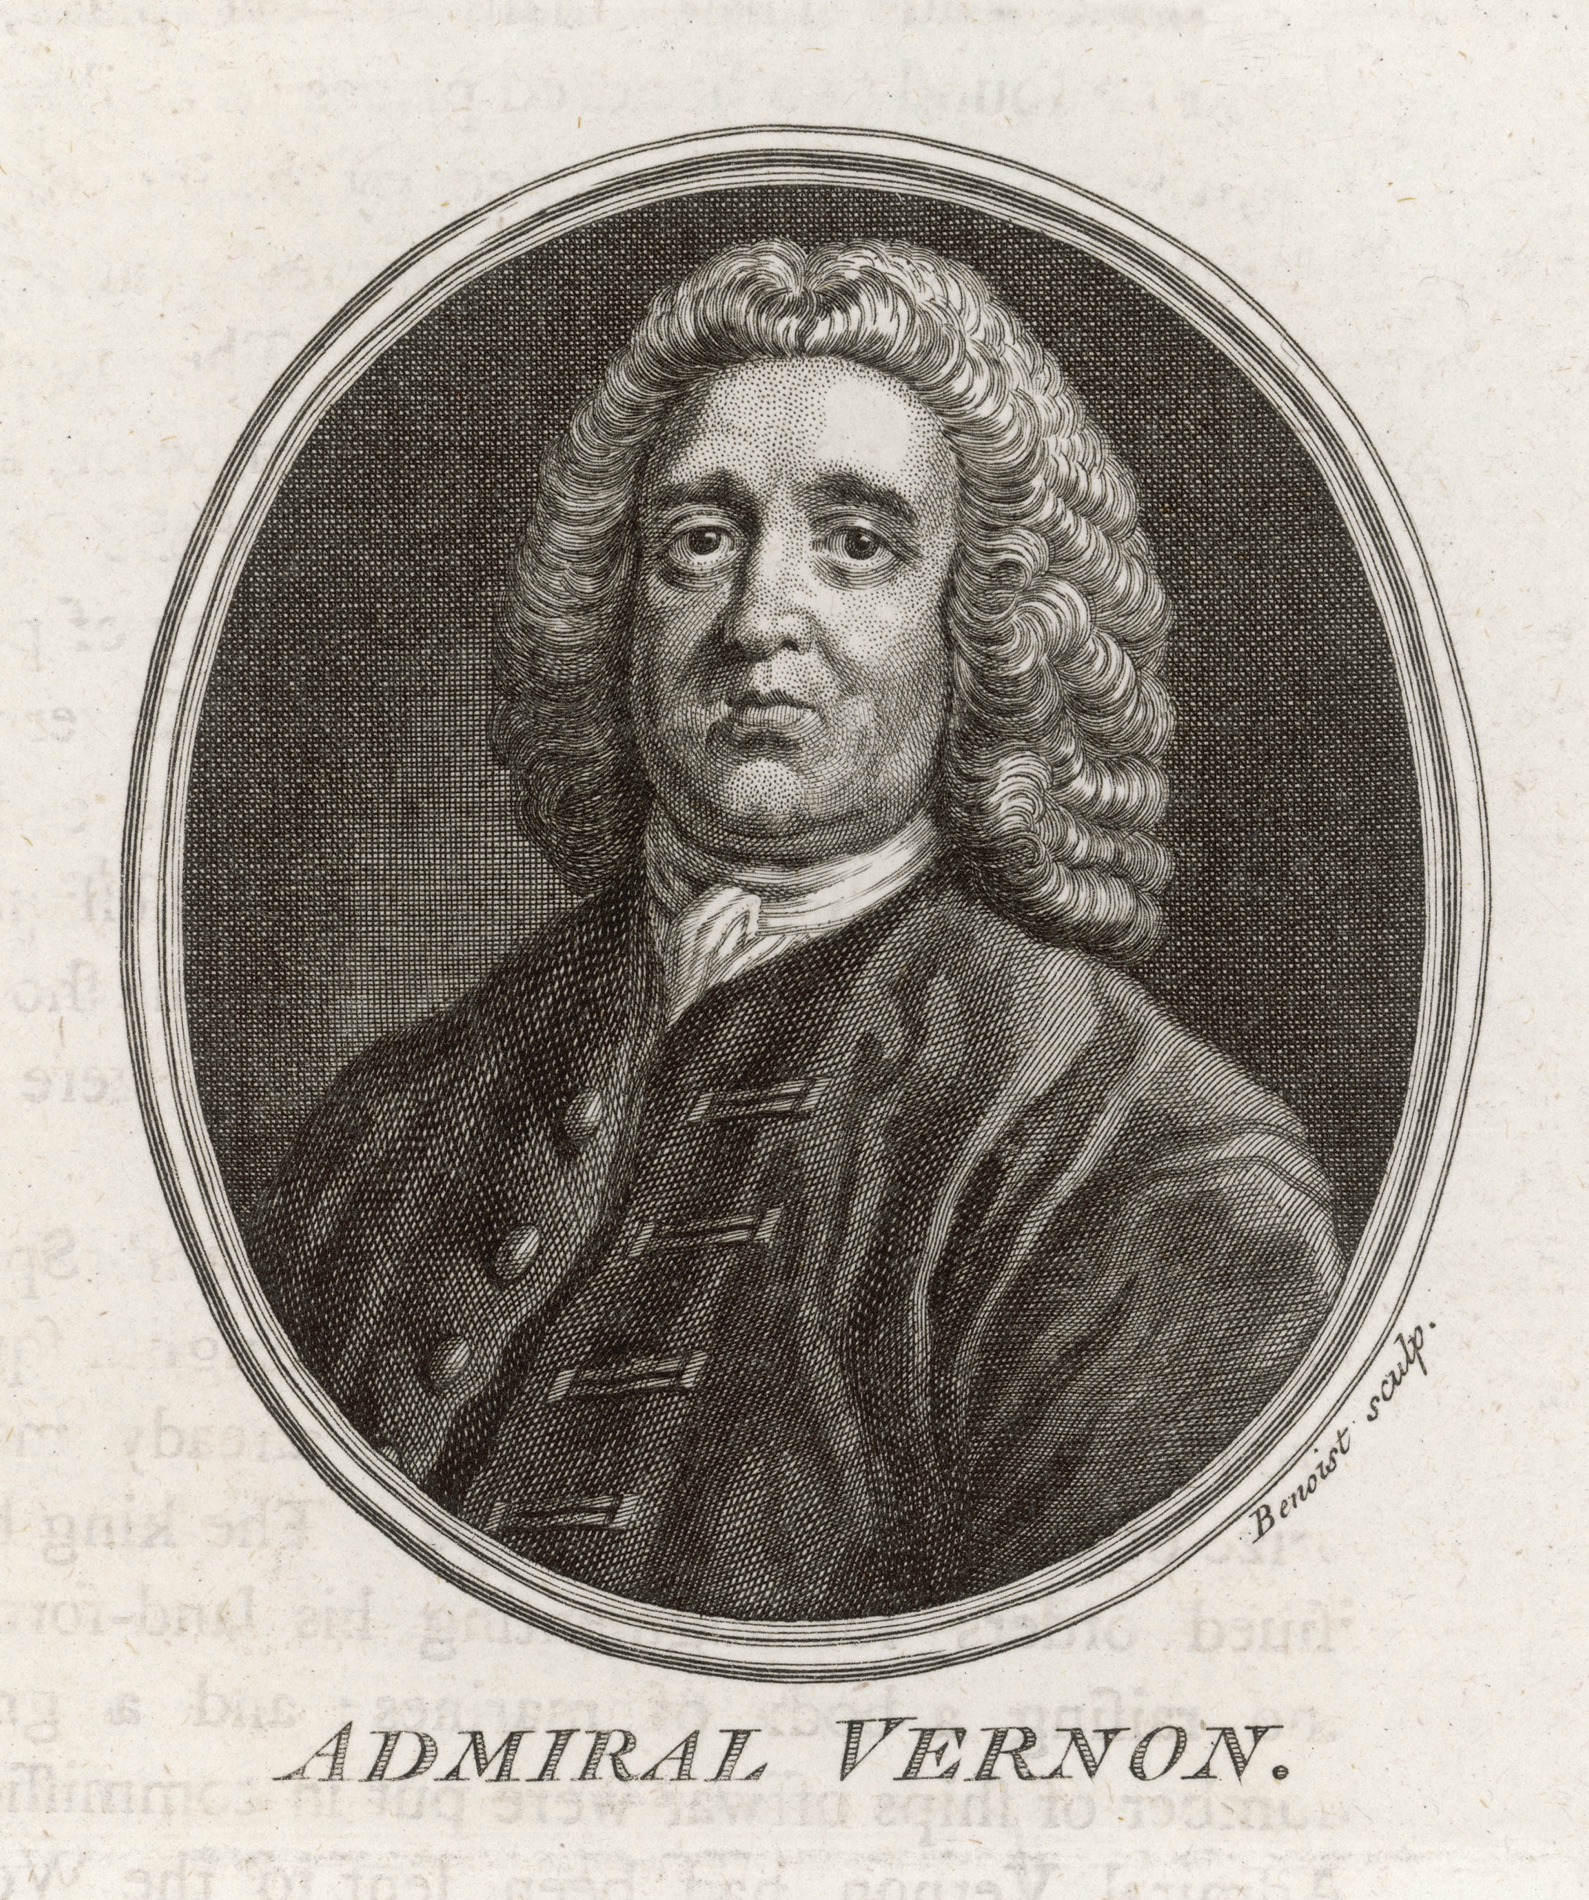 Admirał Edward Vernon (1684-1757), wynalazca grogu